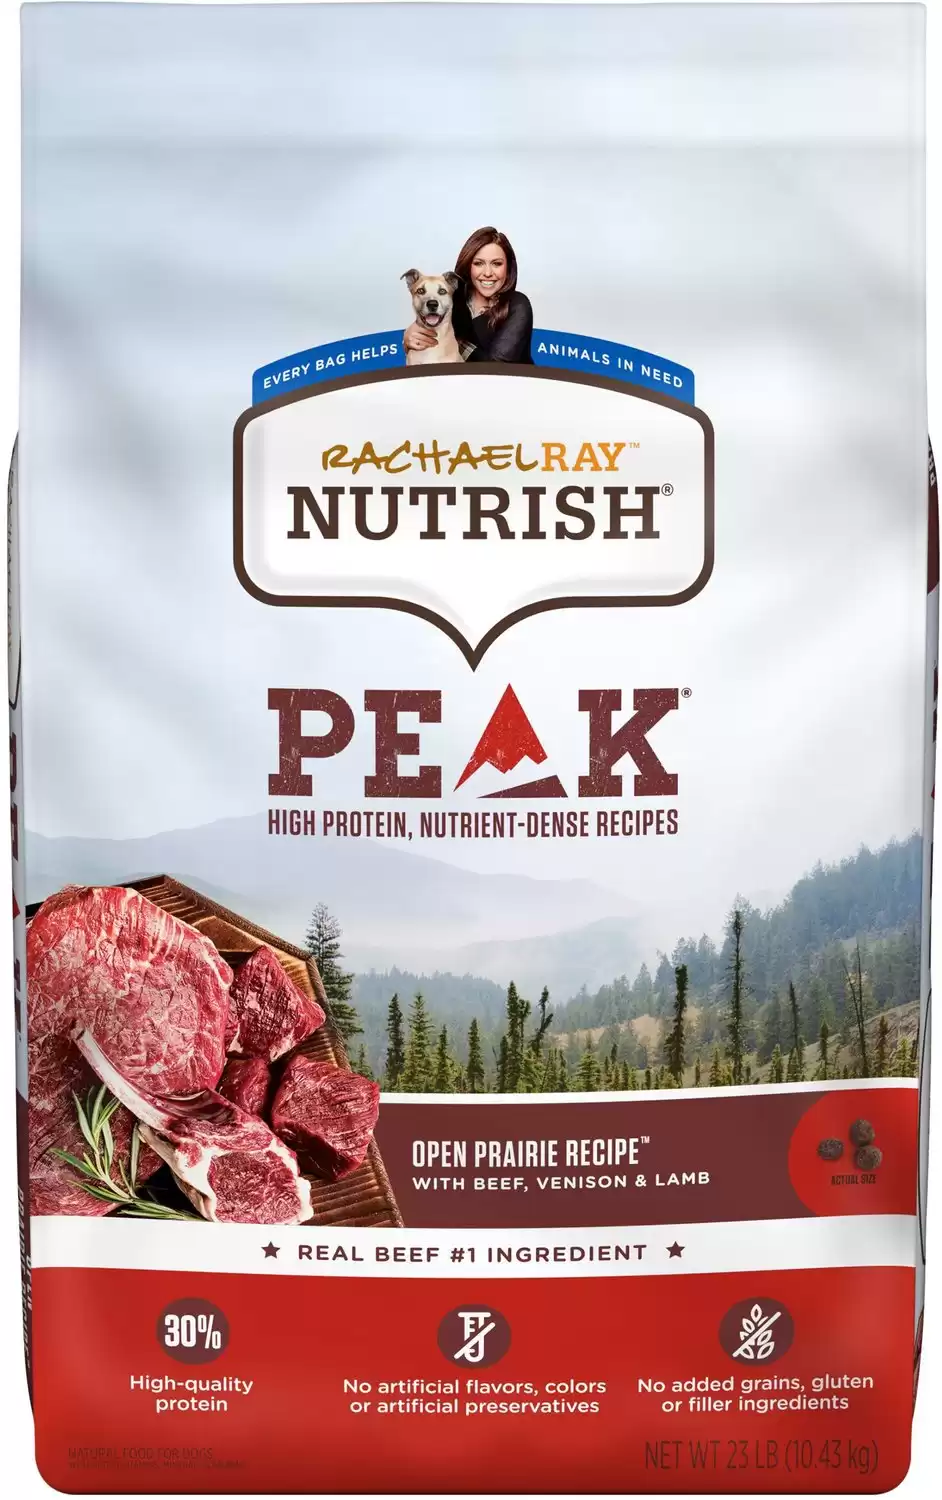 Rachael Ray Nutrish PEAK Open Prairie Recipe with Beef, Venison & Lamb Natural Grain Free Dry Dog Food